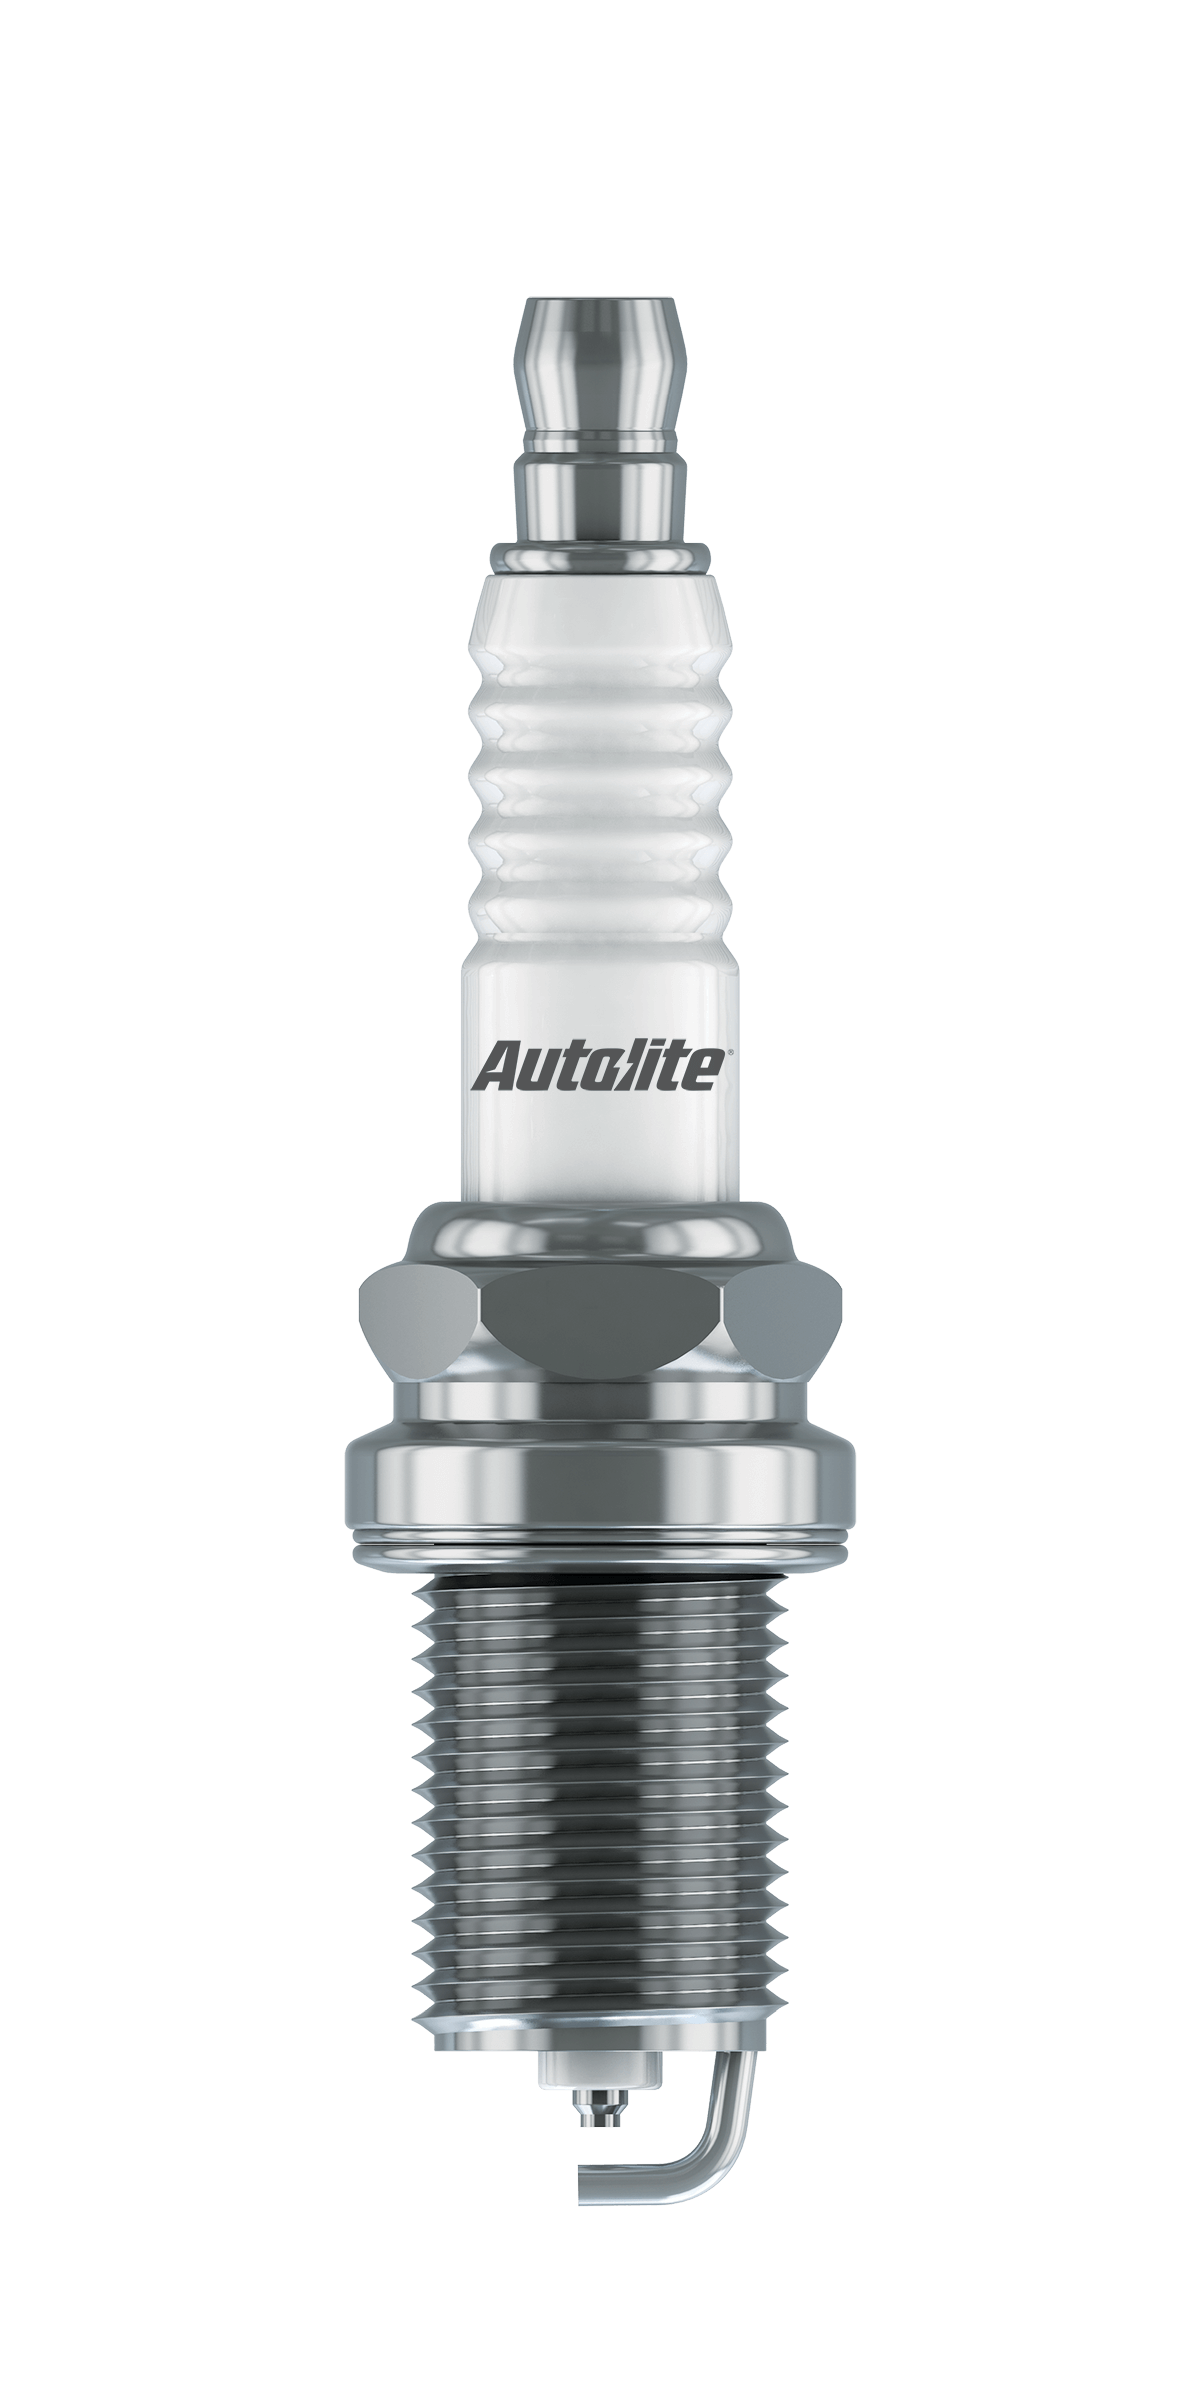 Autolite Double Platinum Spark Plugs